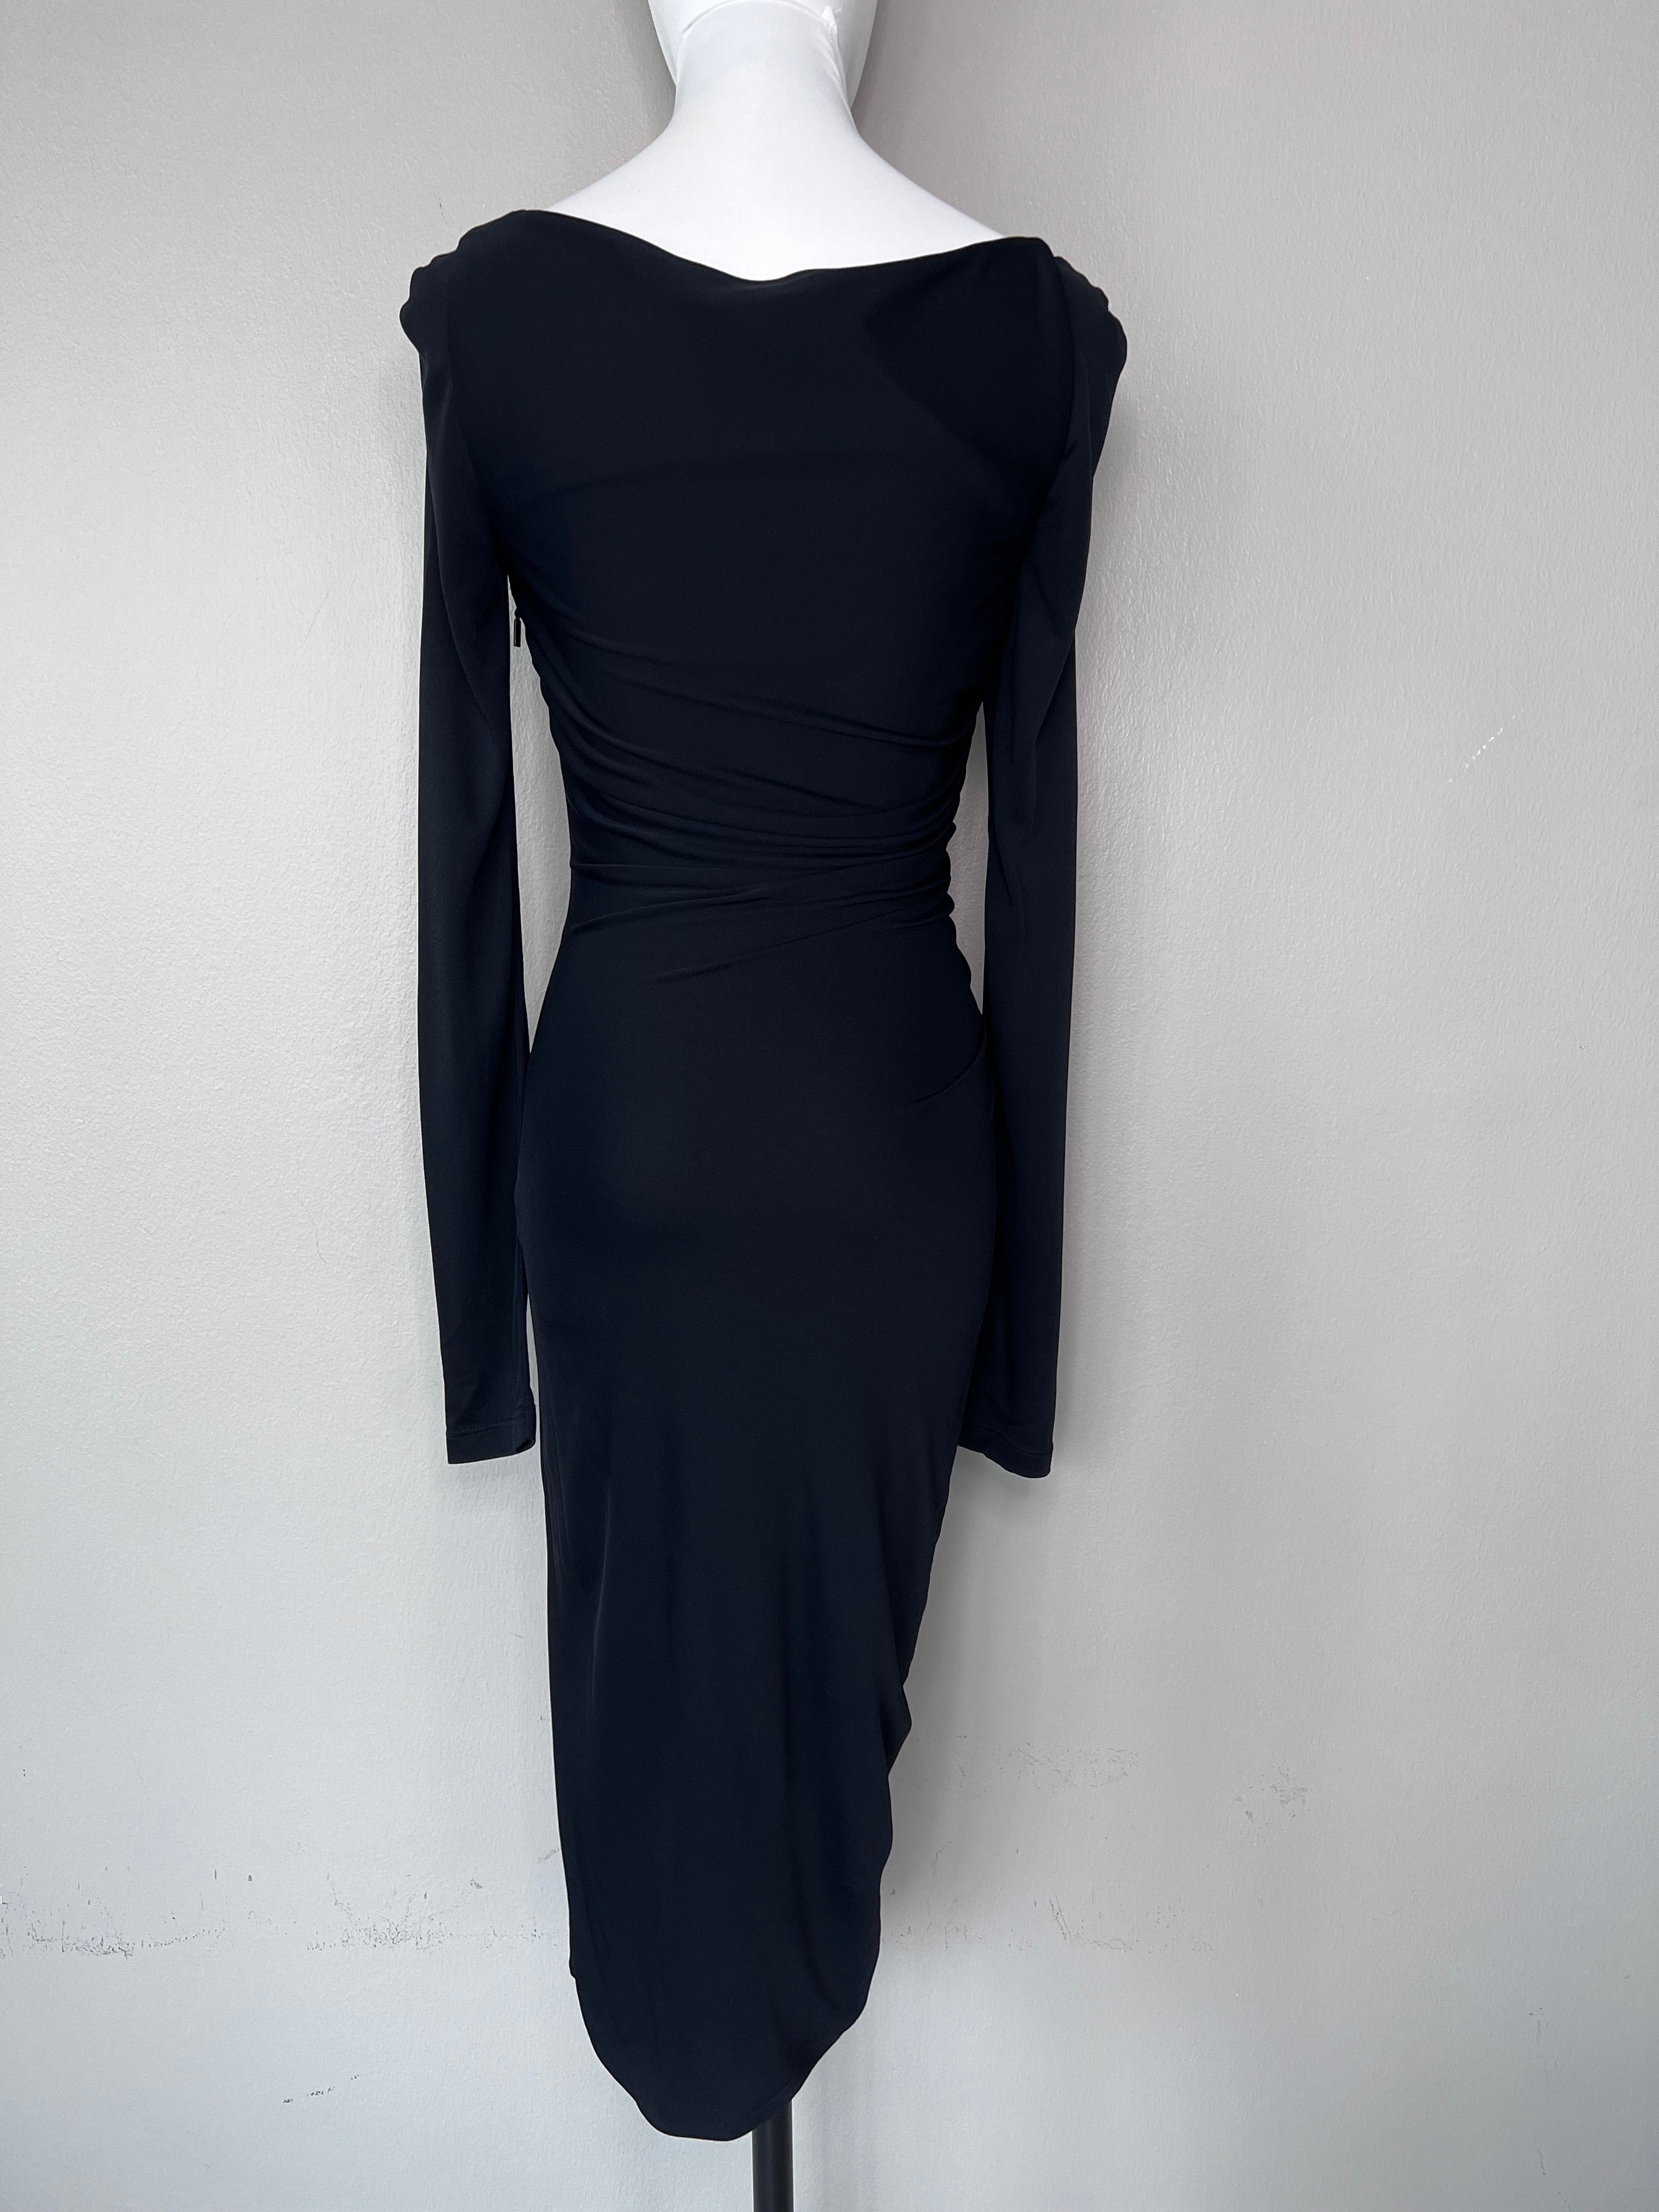 Versace black dress that wraps you body - VERSACE